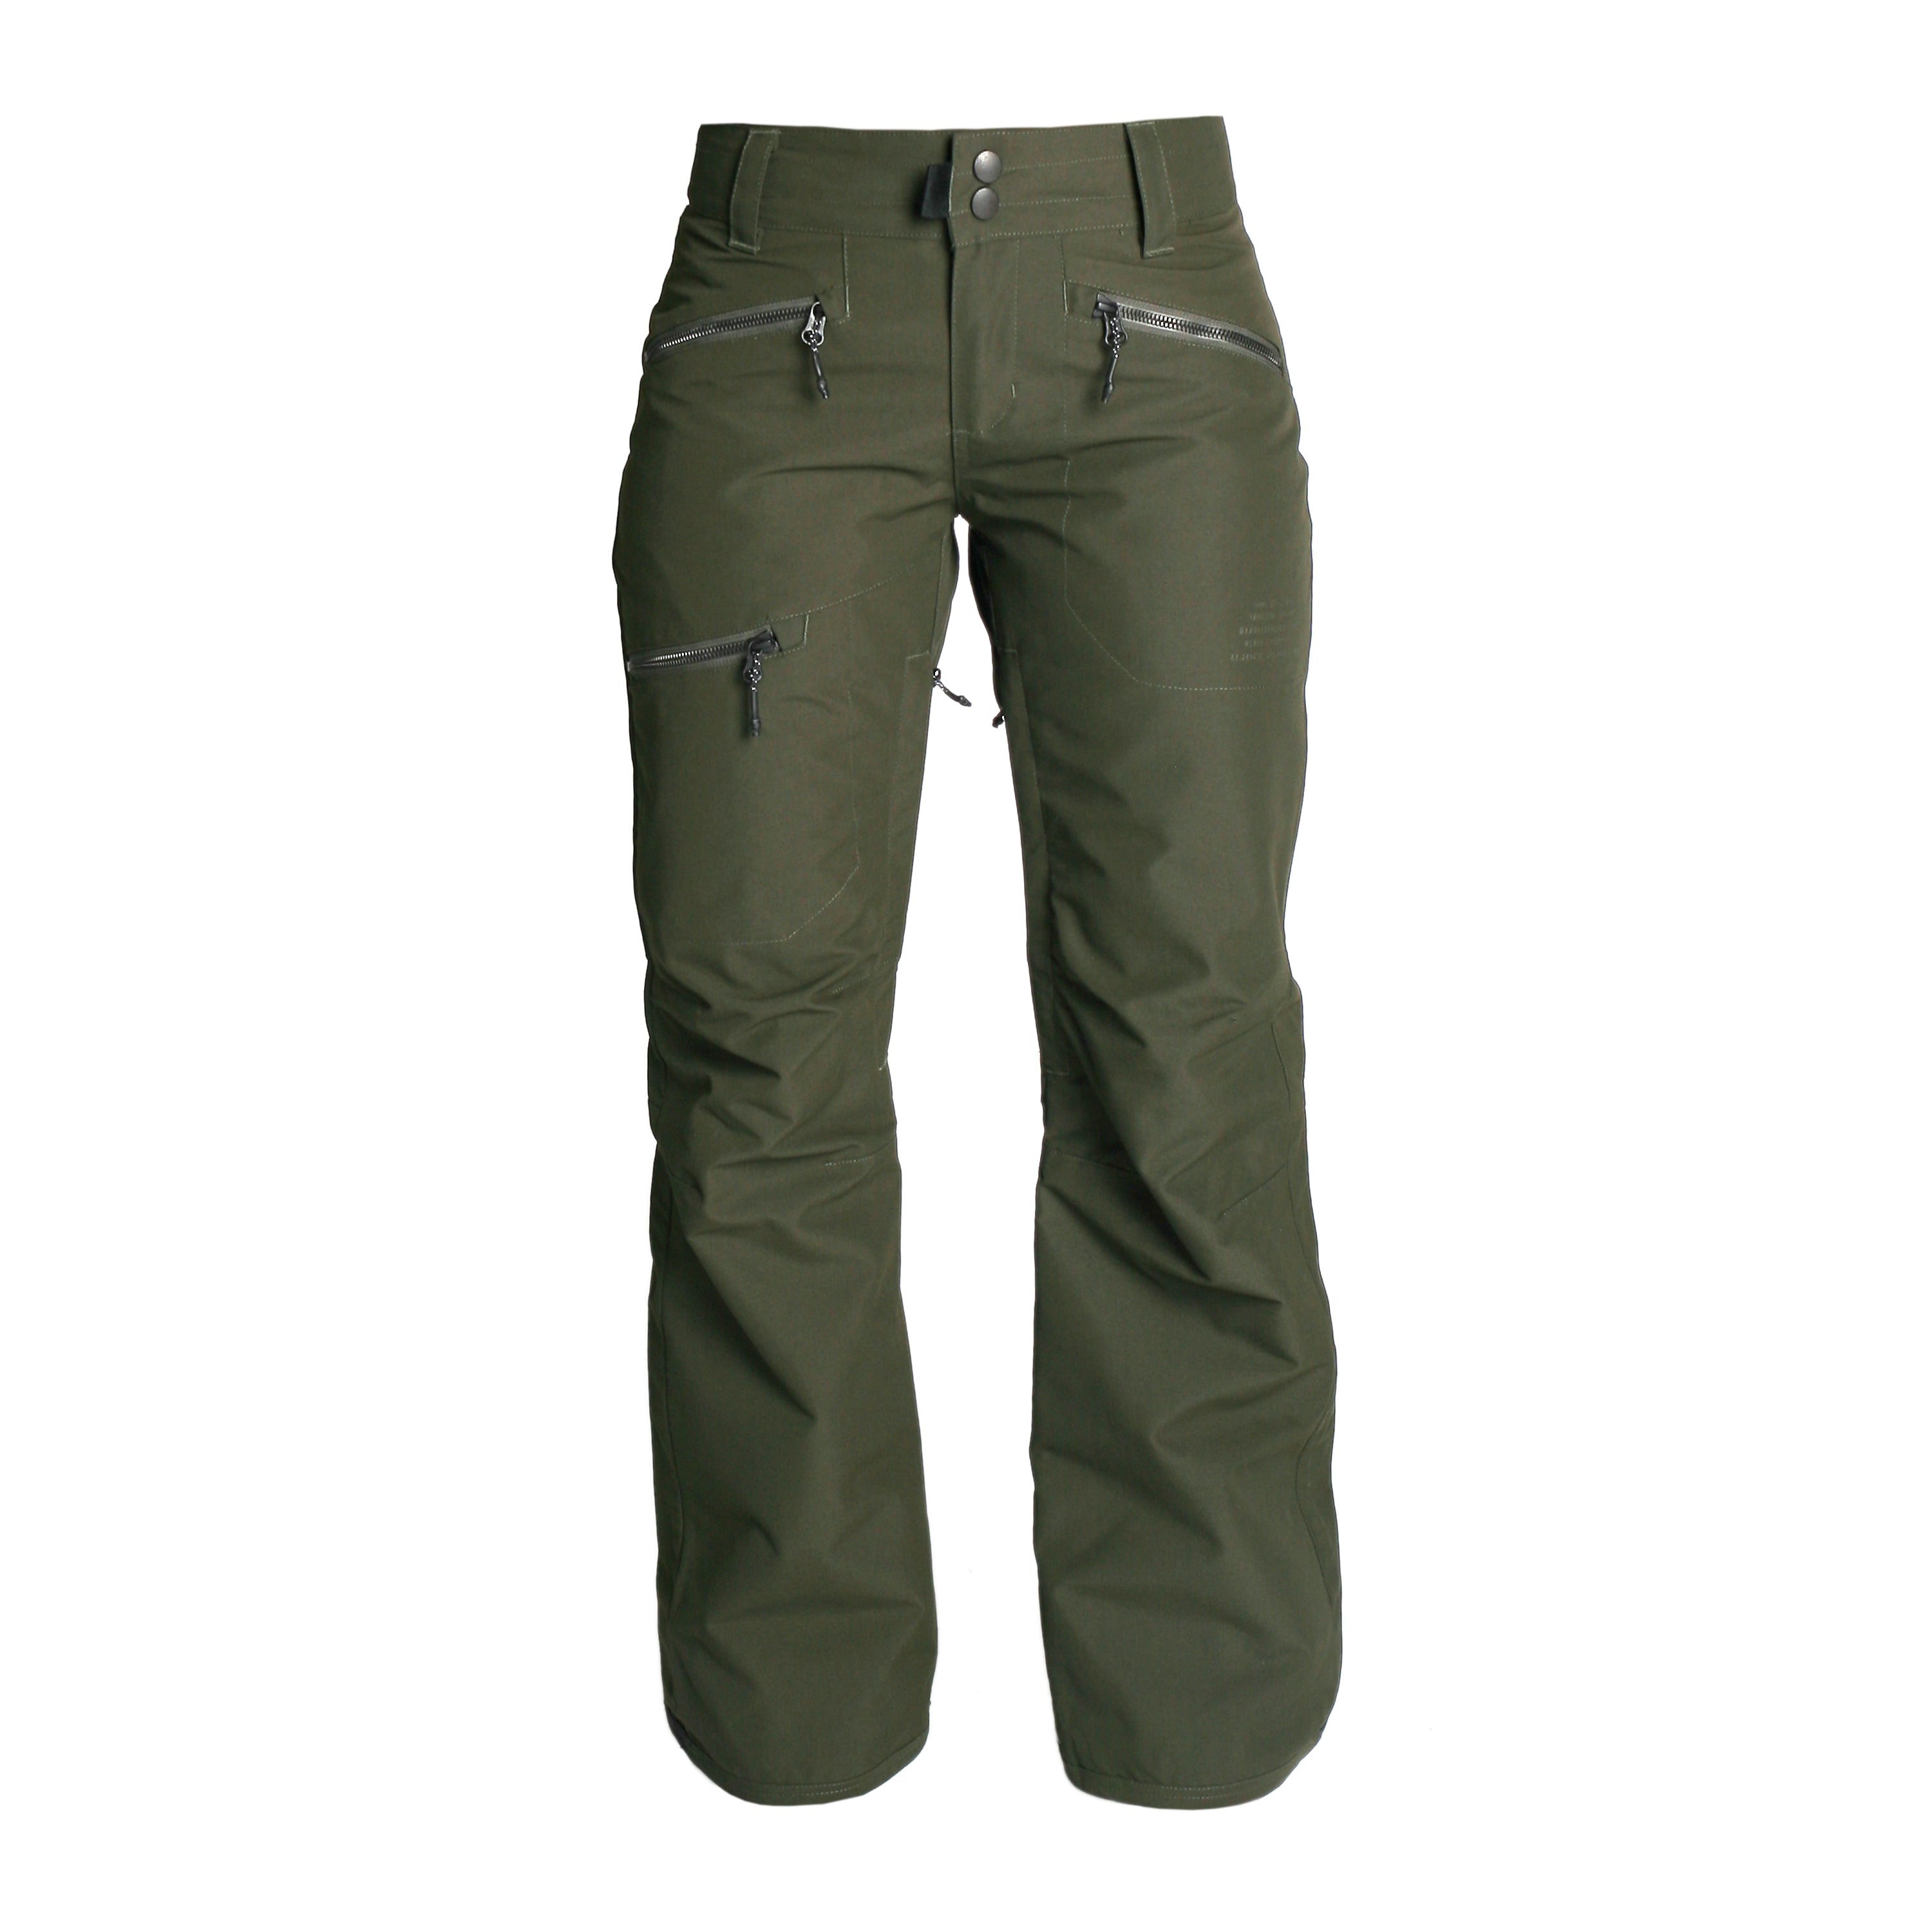 Halti Pine DX Pants - Waterproof trousers Women's, Buy online